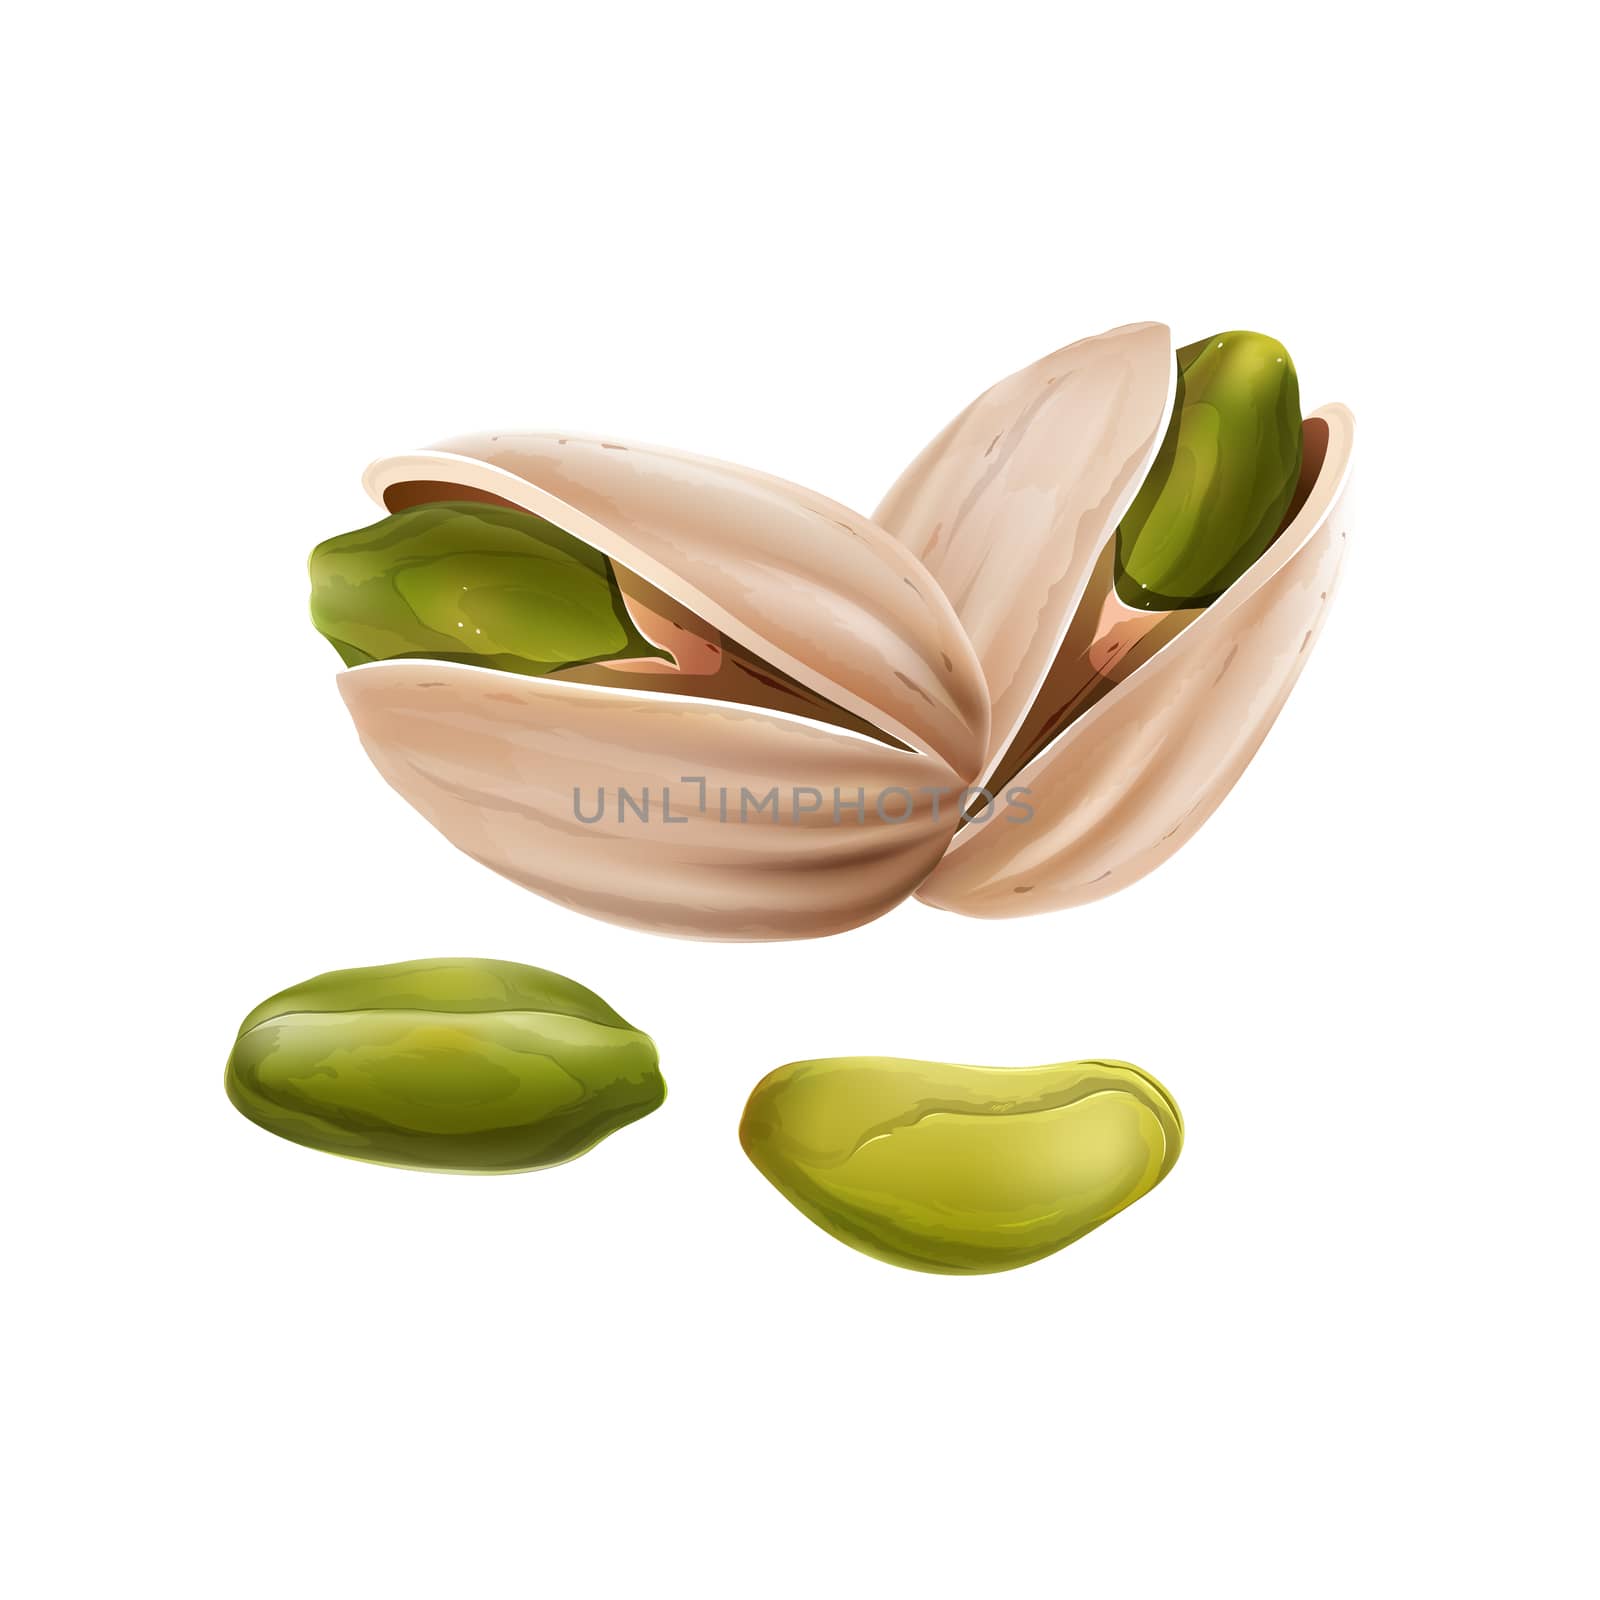 Pistachio nuts isolated illustration on white background.